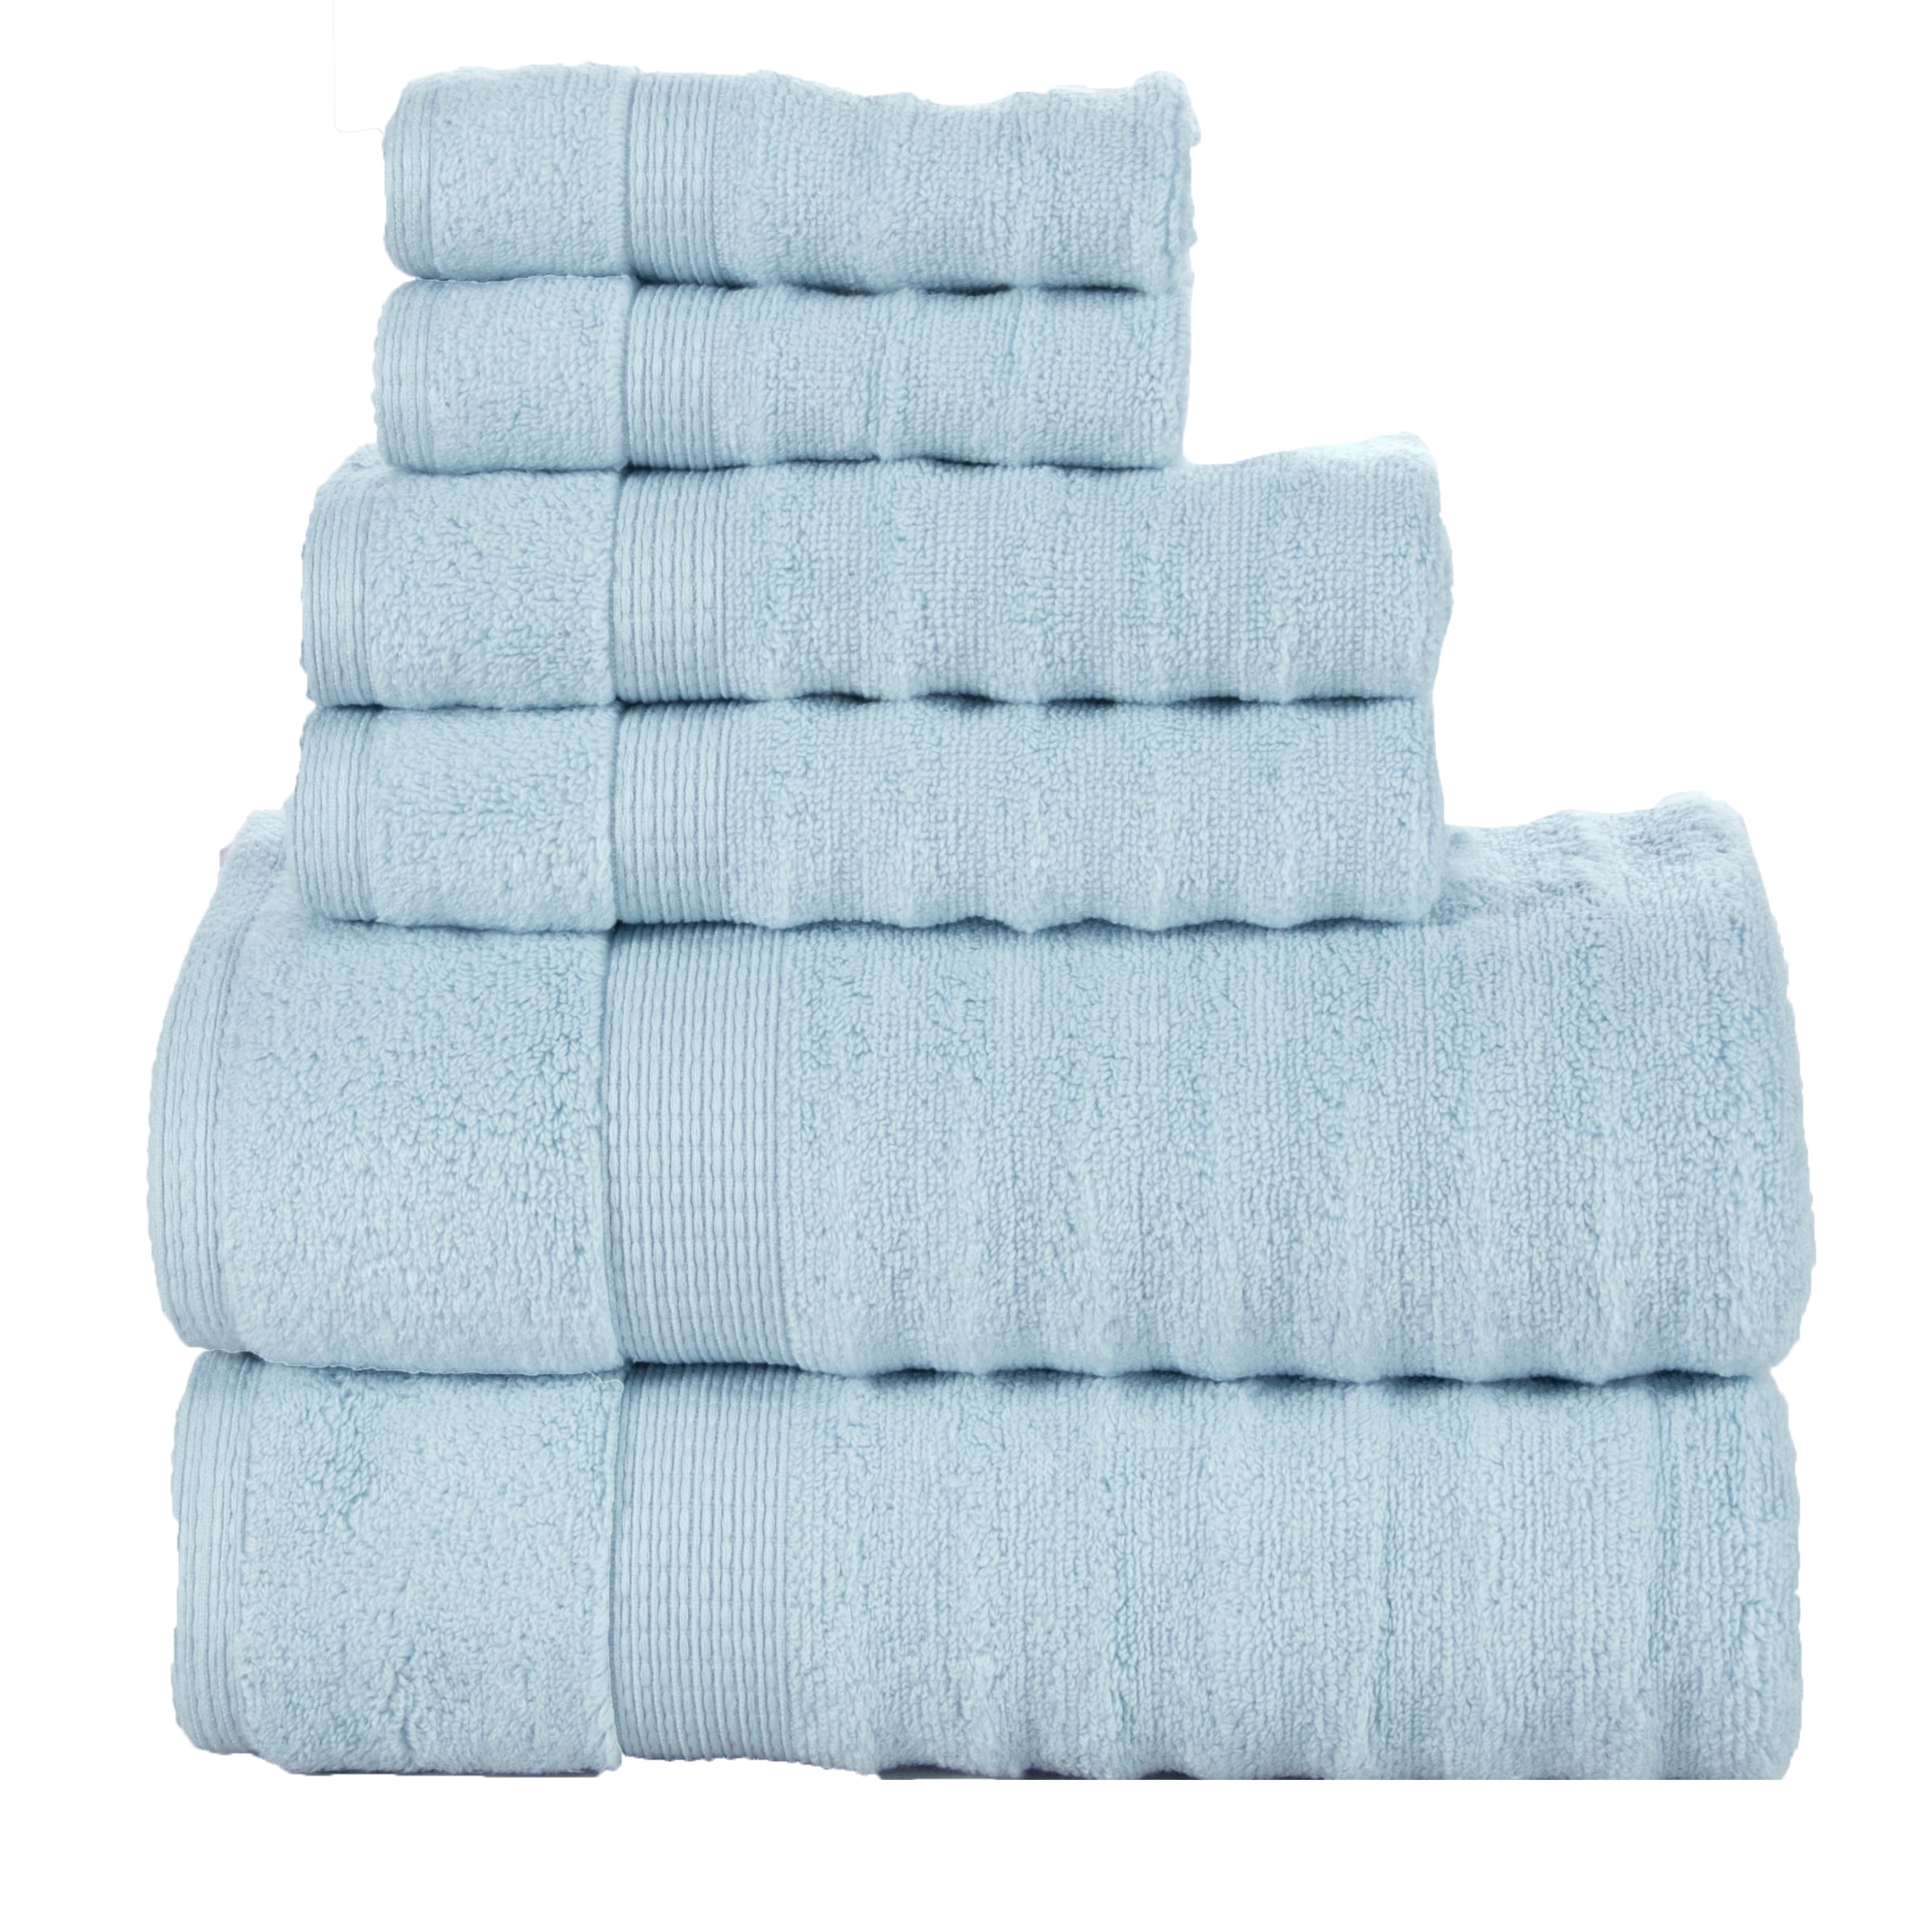 Natural Organic Bamboo Fiber Towel Set ..6 colors..cashmere feel bath/face/wash 